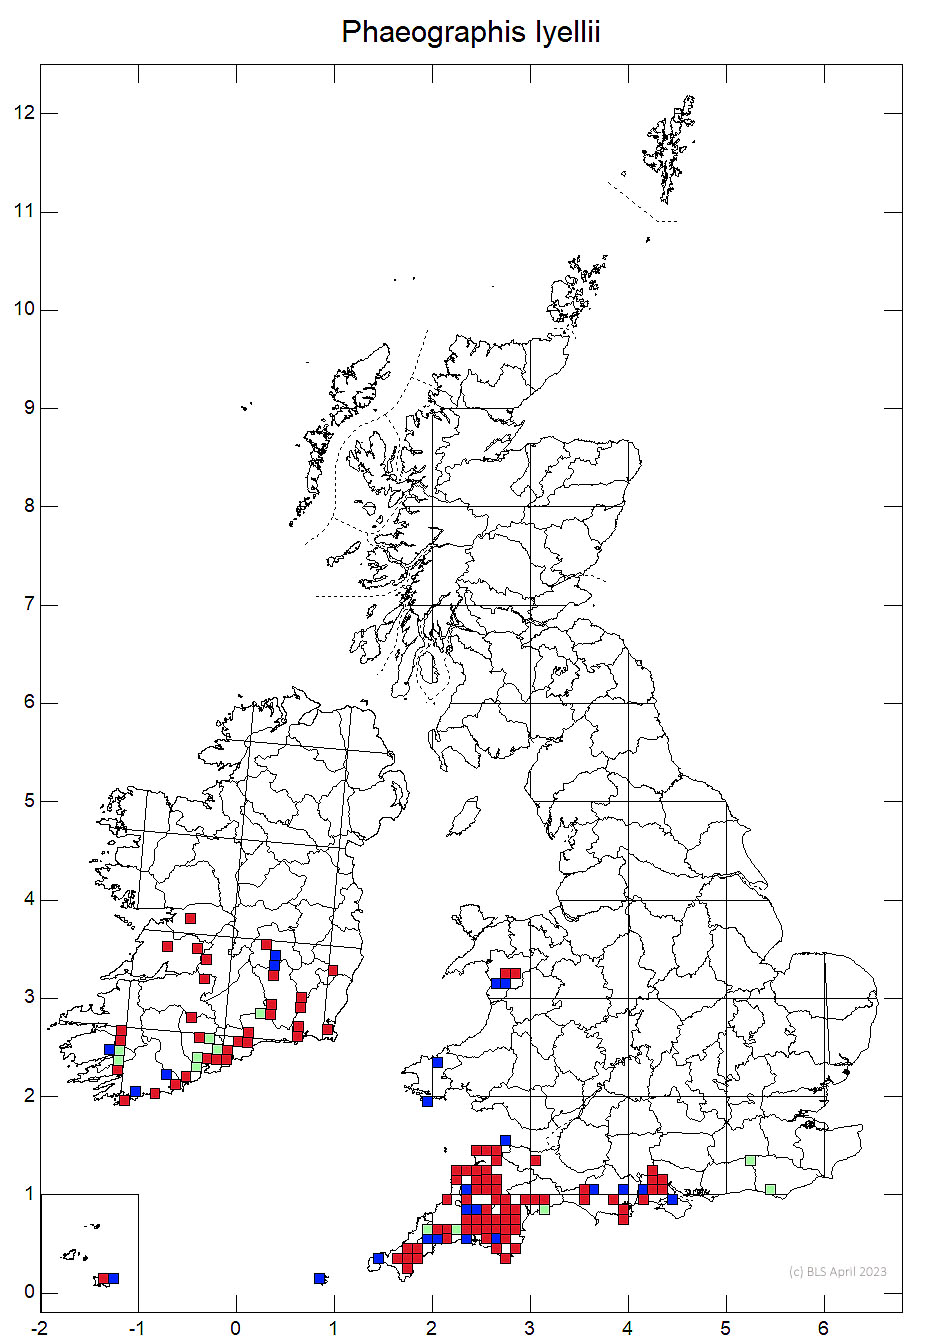 Phaeographis lyellii 10km sq distribution map